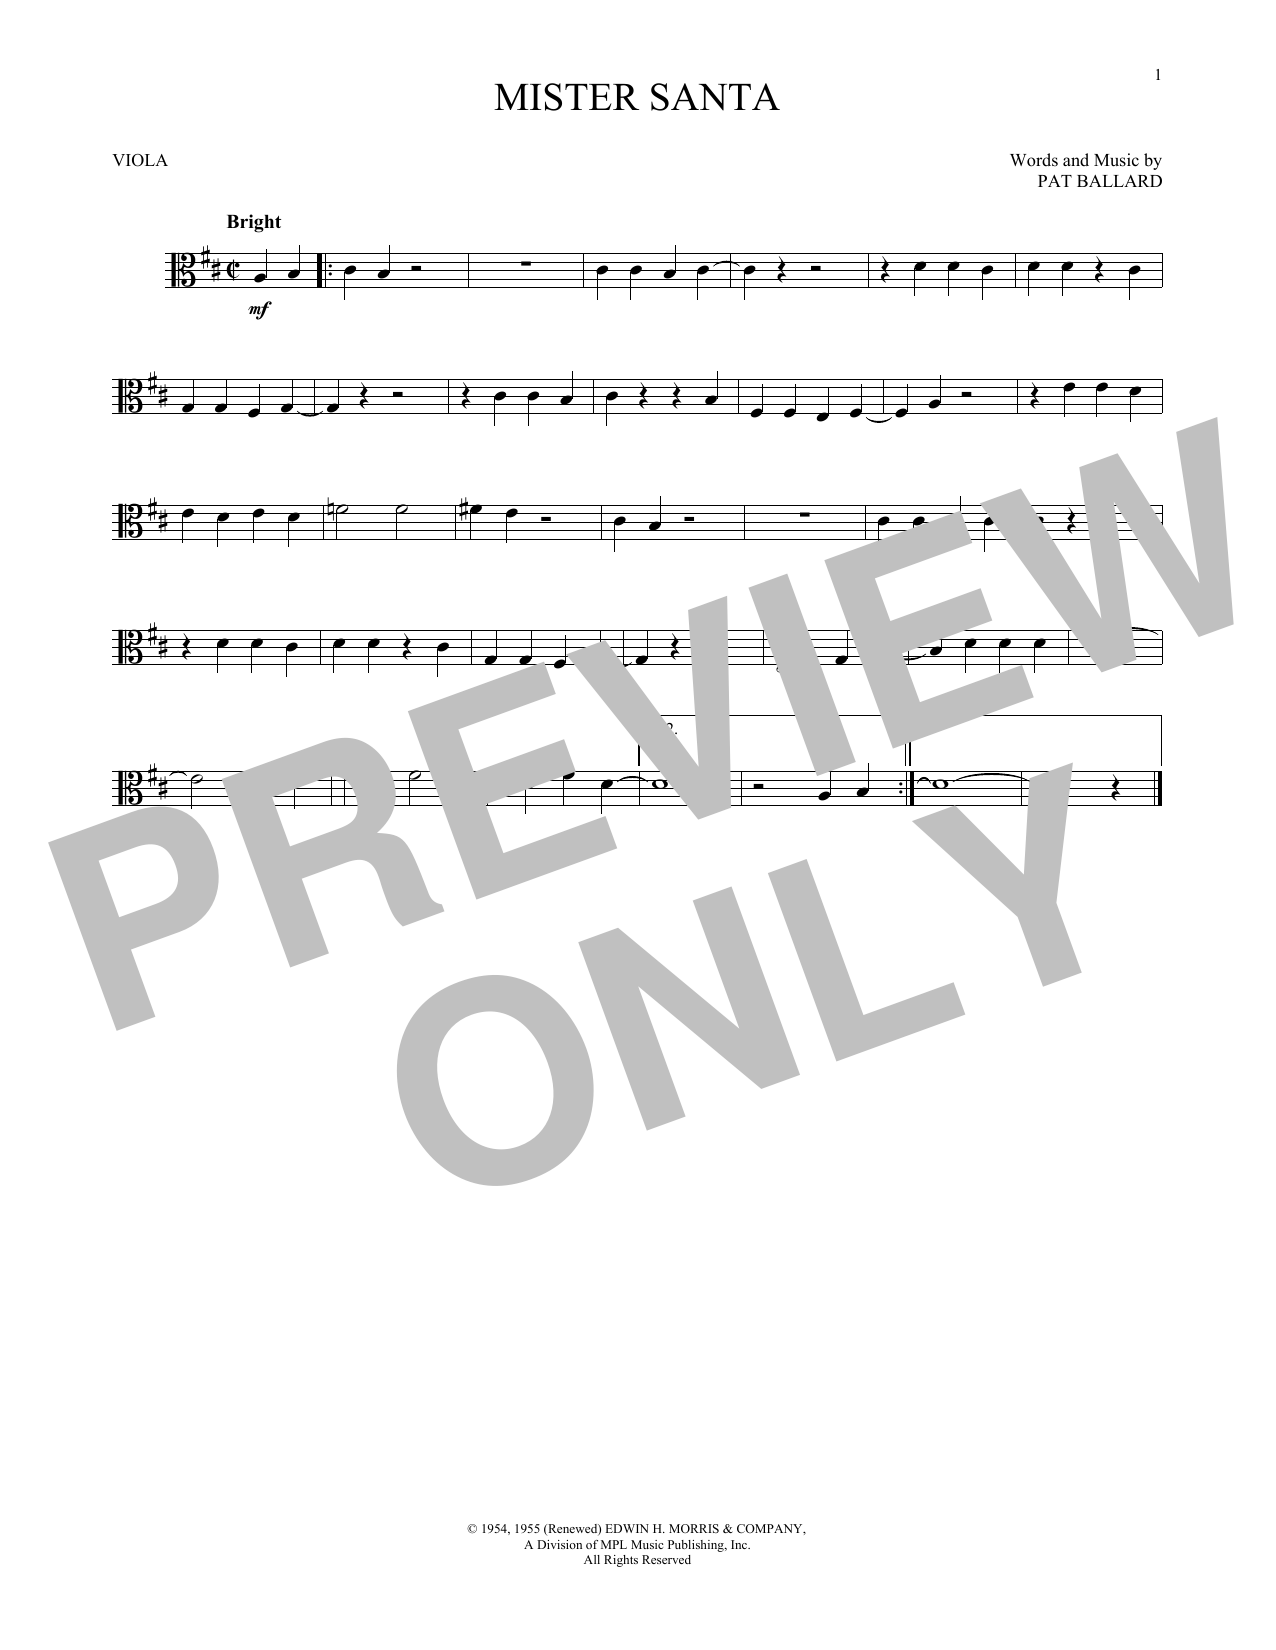 Amy Grant Mister Santa Sheet Music Notes & Chords for Viola - Download or Print PDF